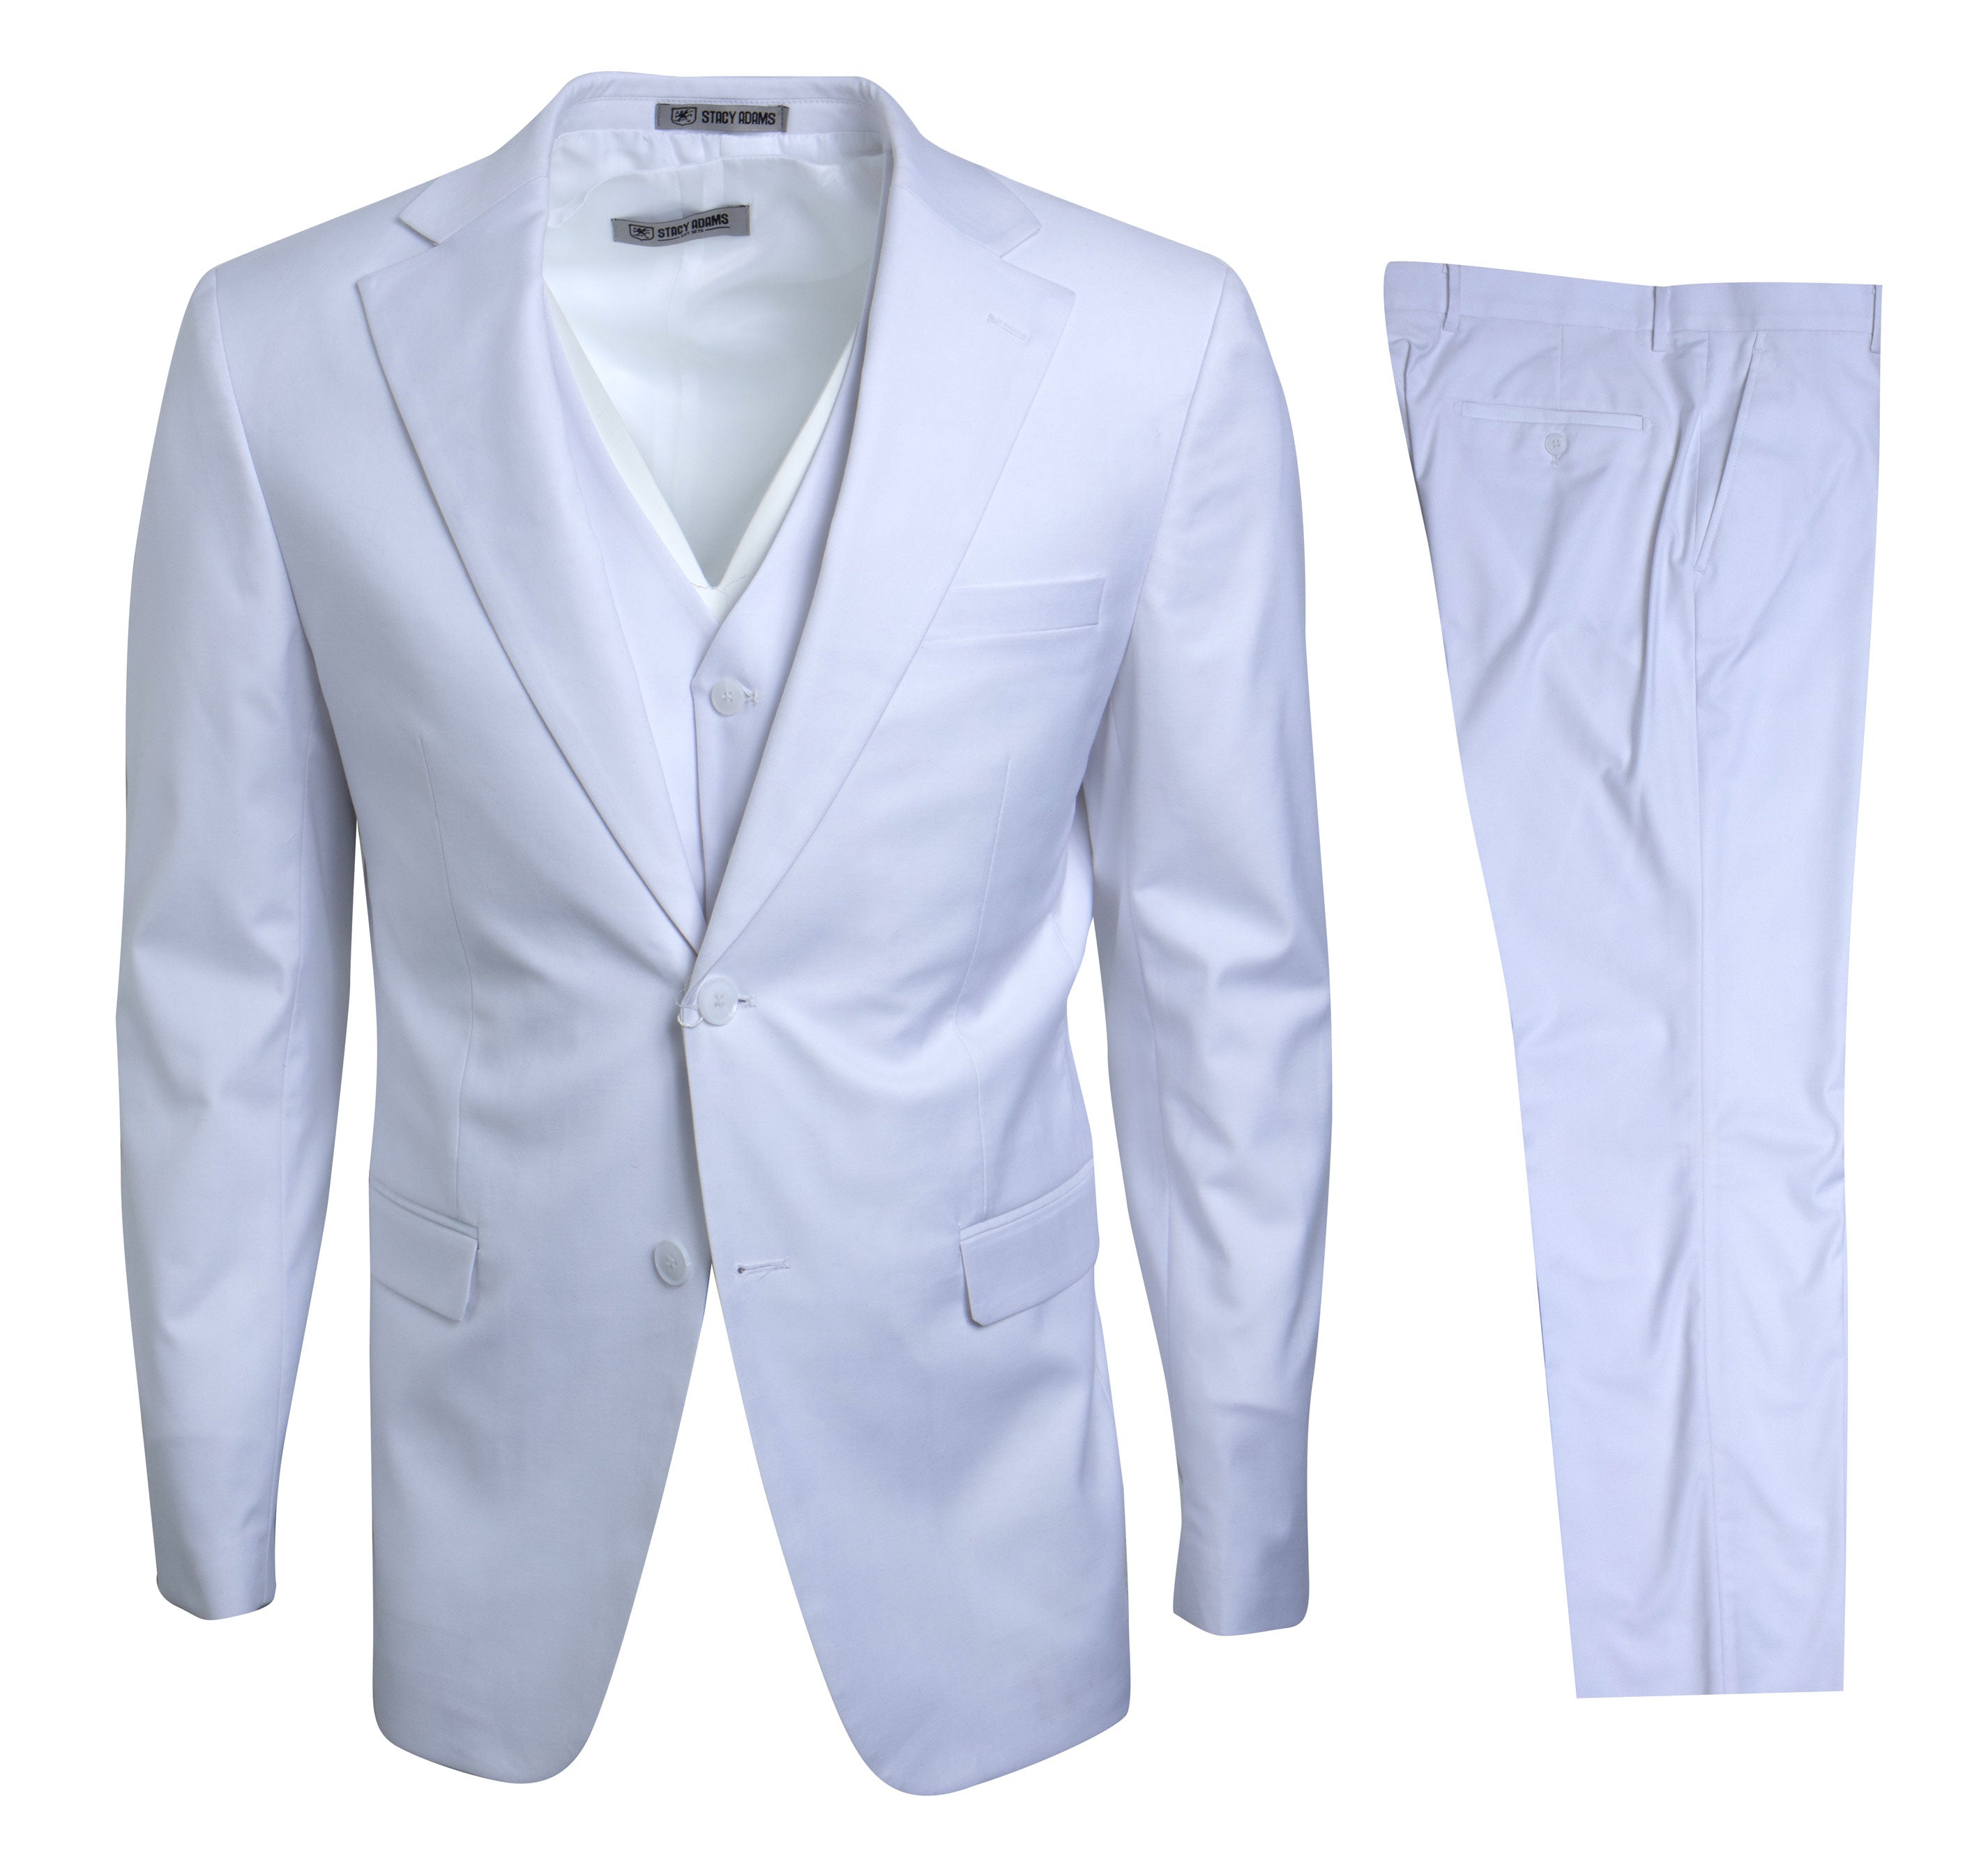 White Stacy Adams Men's Suit